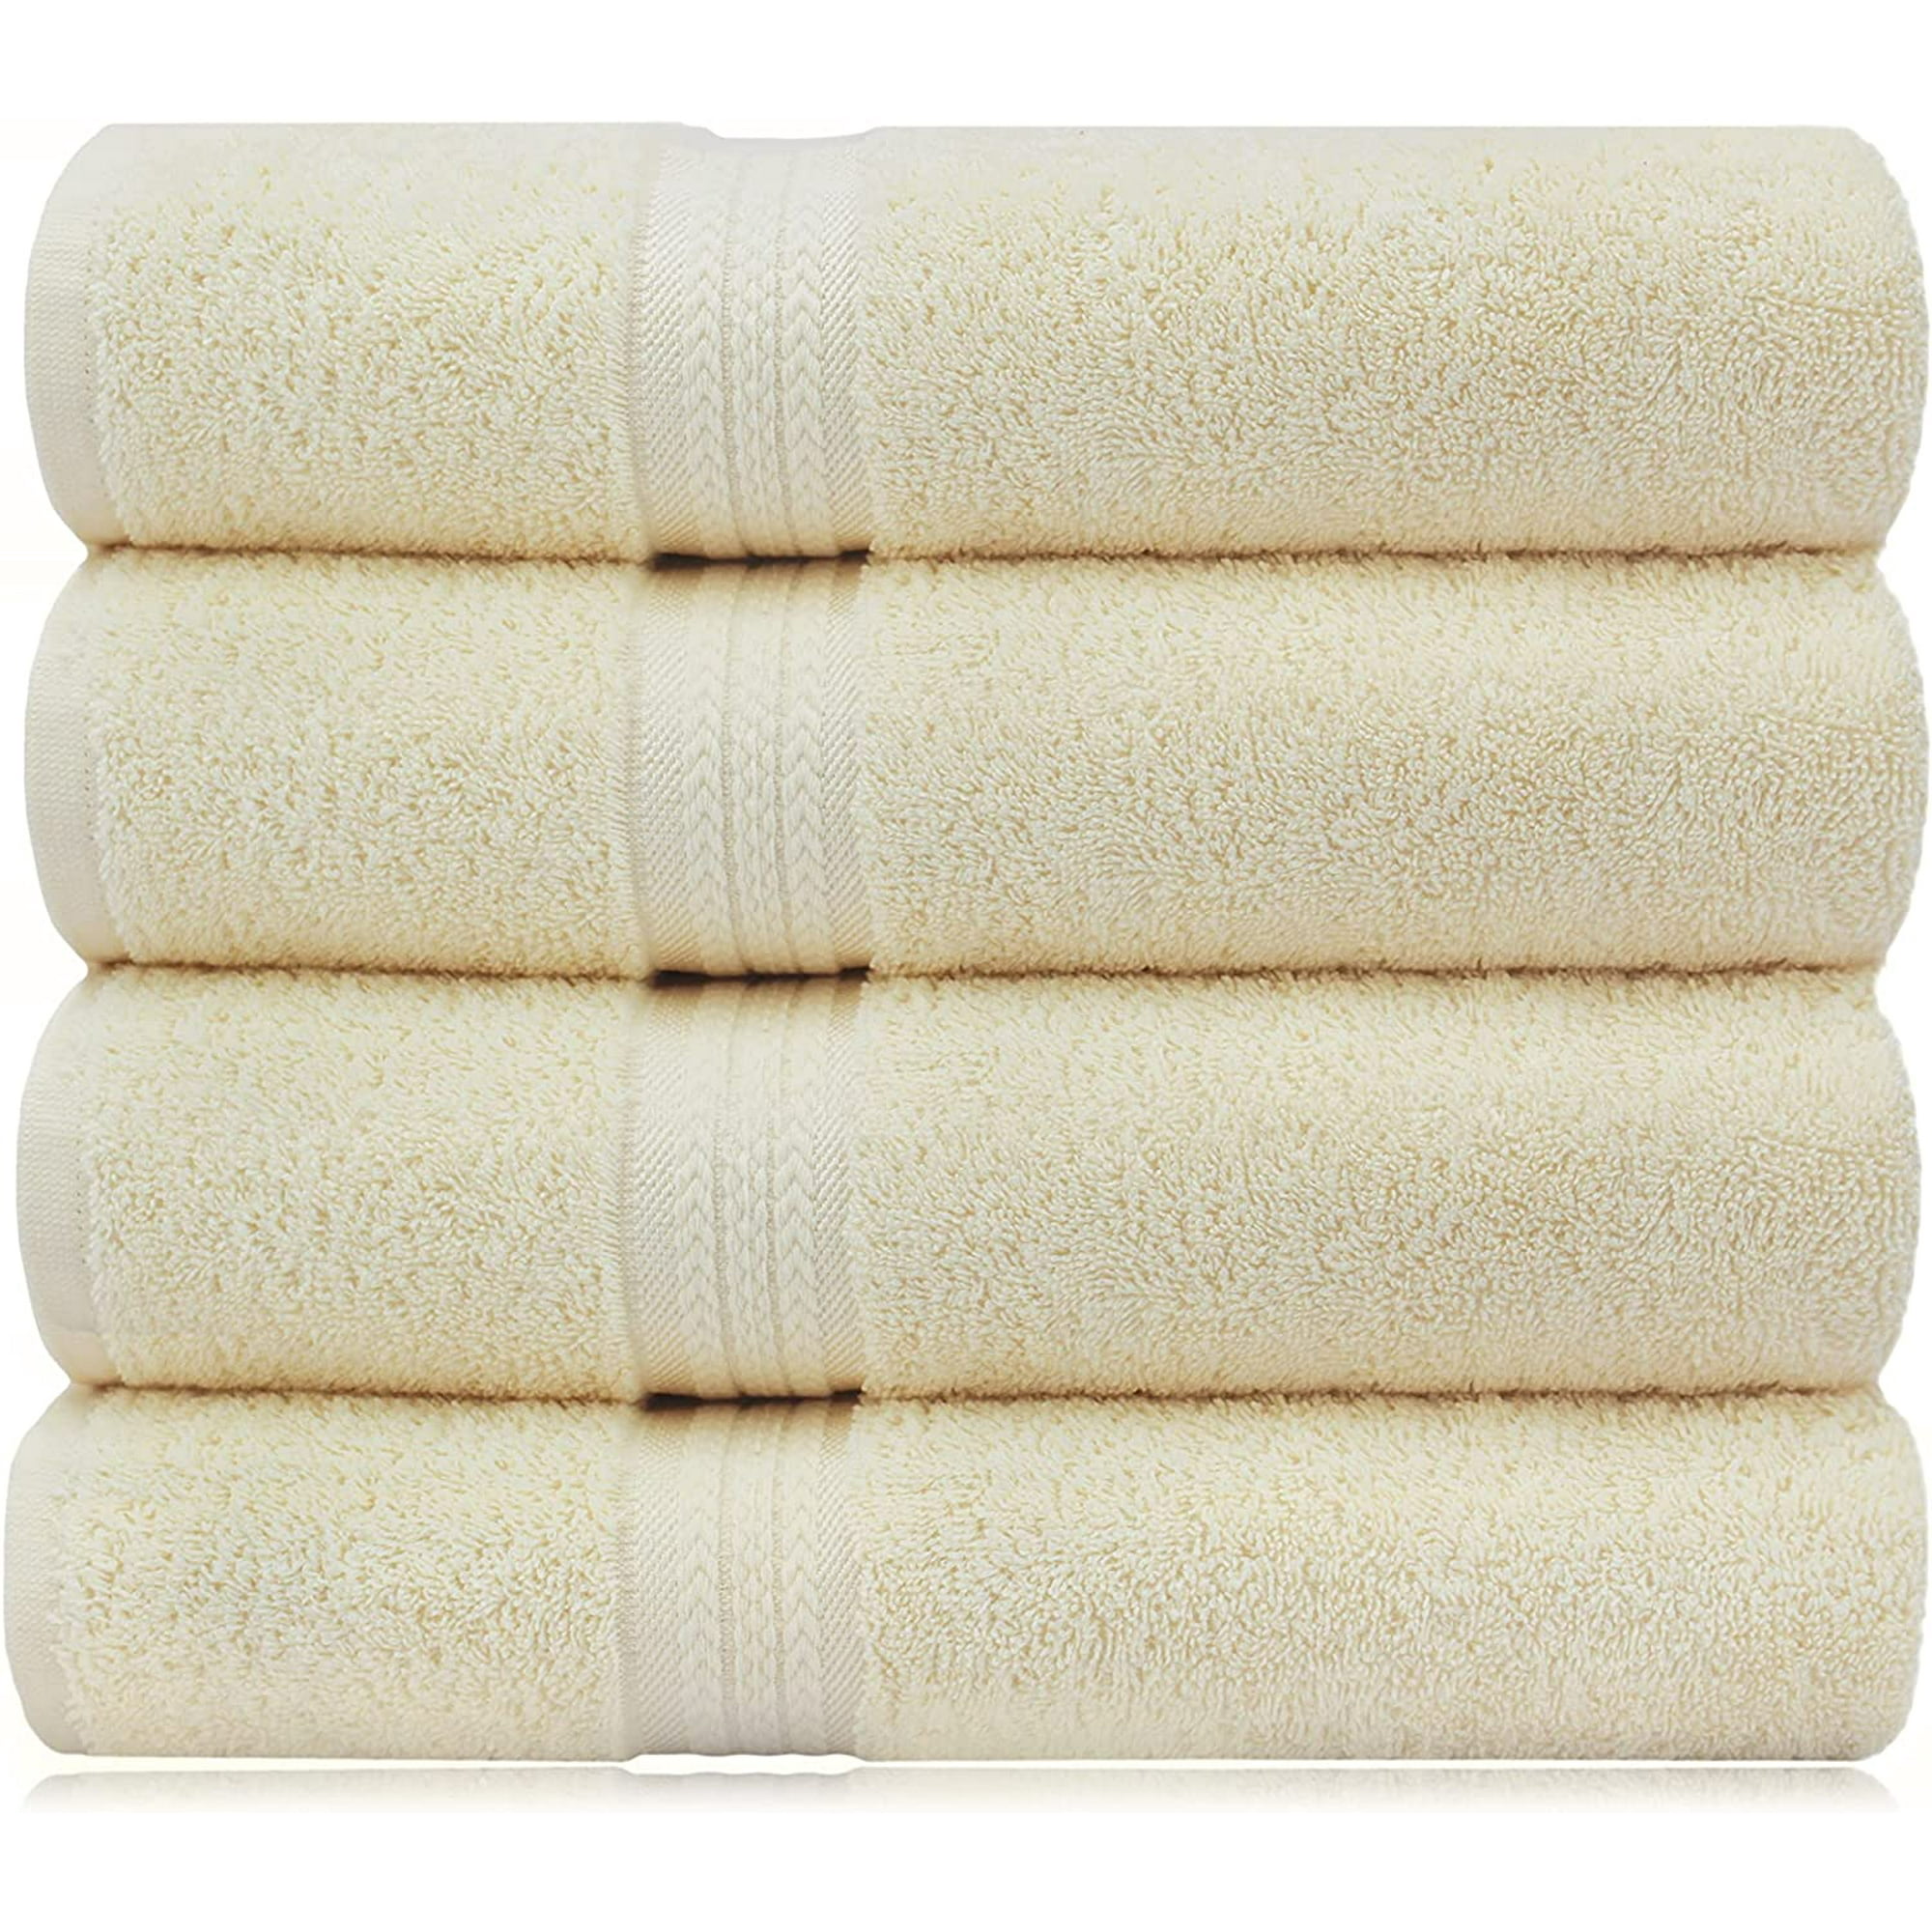 Ultra Soft Oversized Bath Towels - 4 Pack XL Bath Towel Set - 30x54 -  Absorbent Everyday Luxury Hotel Bathroom Spa Gym S